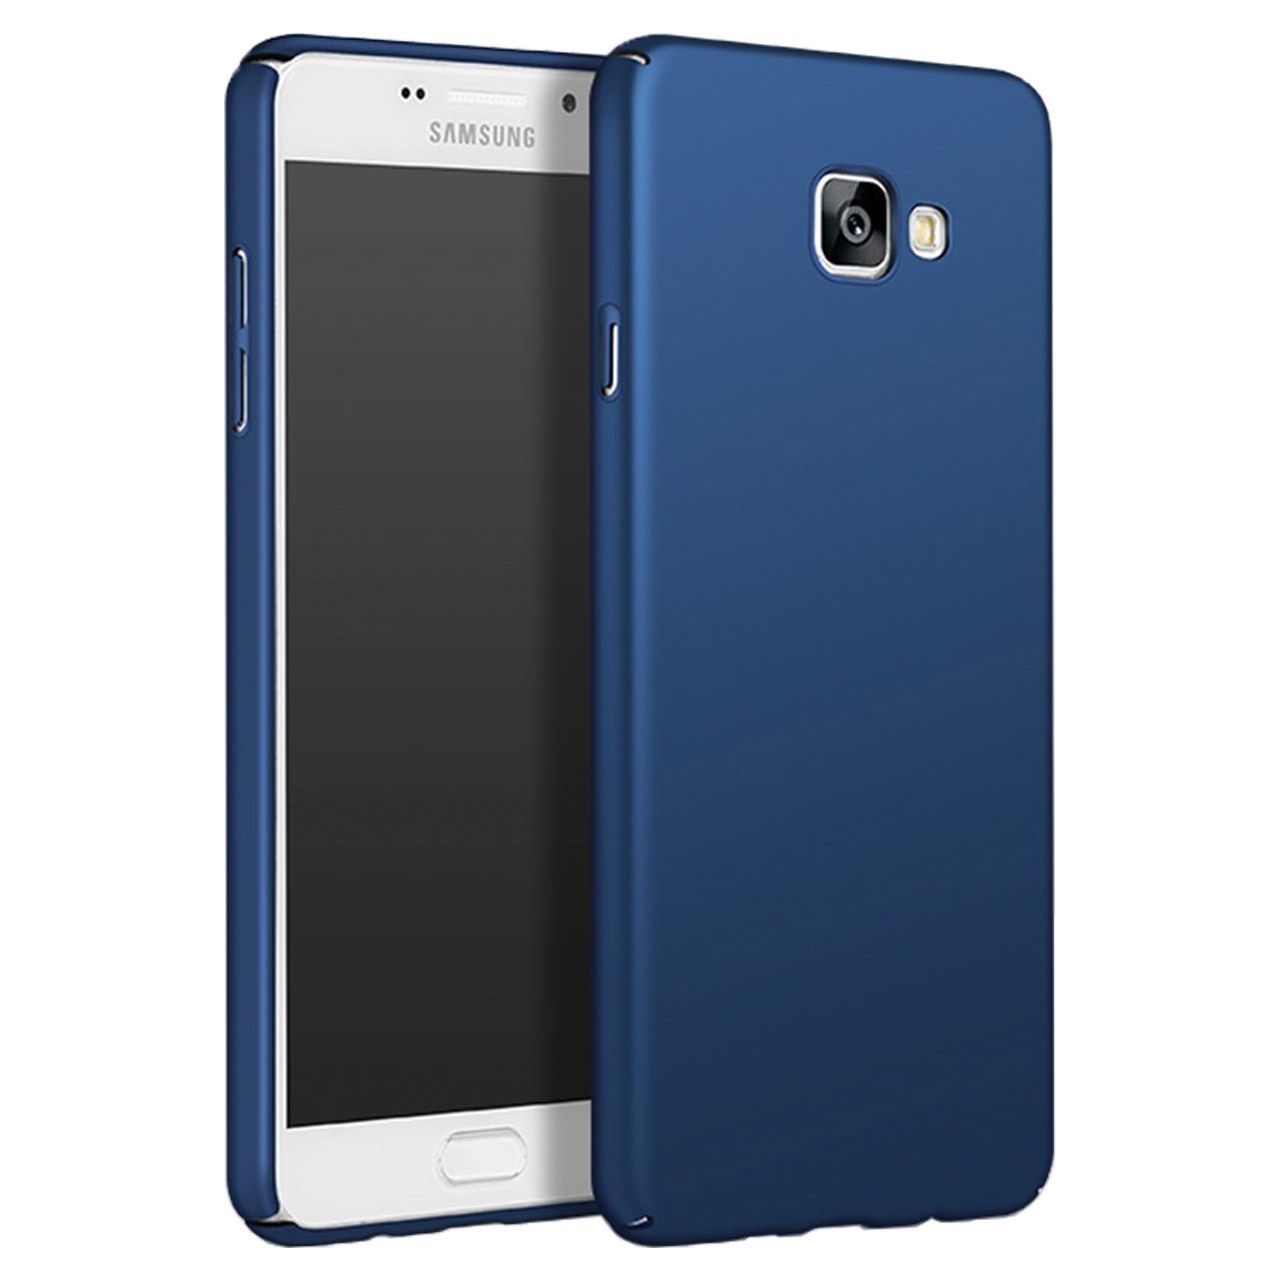 کاور  آیپکی مدل Hard Case مناسب برای گوشی Samsung Galaxy A7 2017